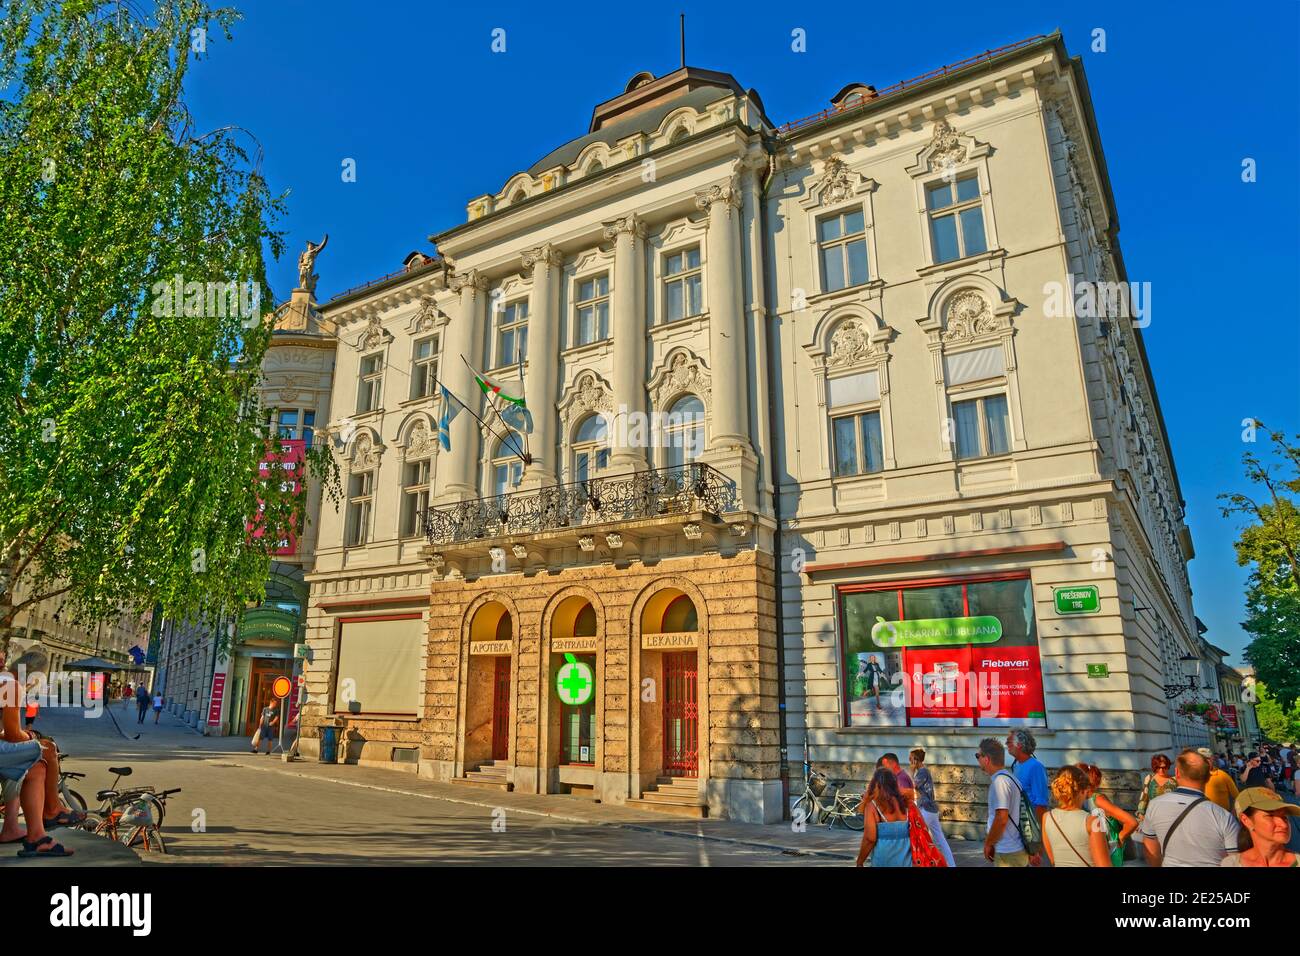 Zentrales Apothekengebäude, Preseren Platz im Stadtzentrum von Ljubljana, Hauptstadt Sloweniens. Stockfoto